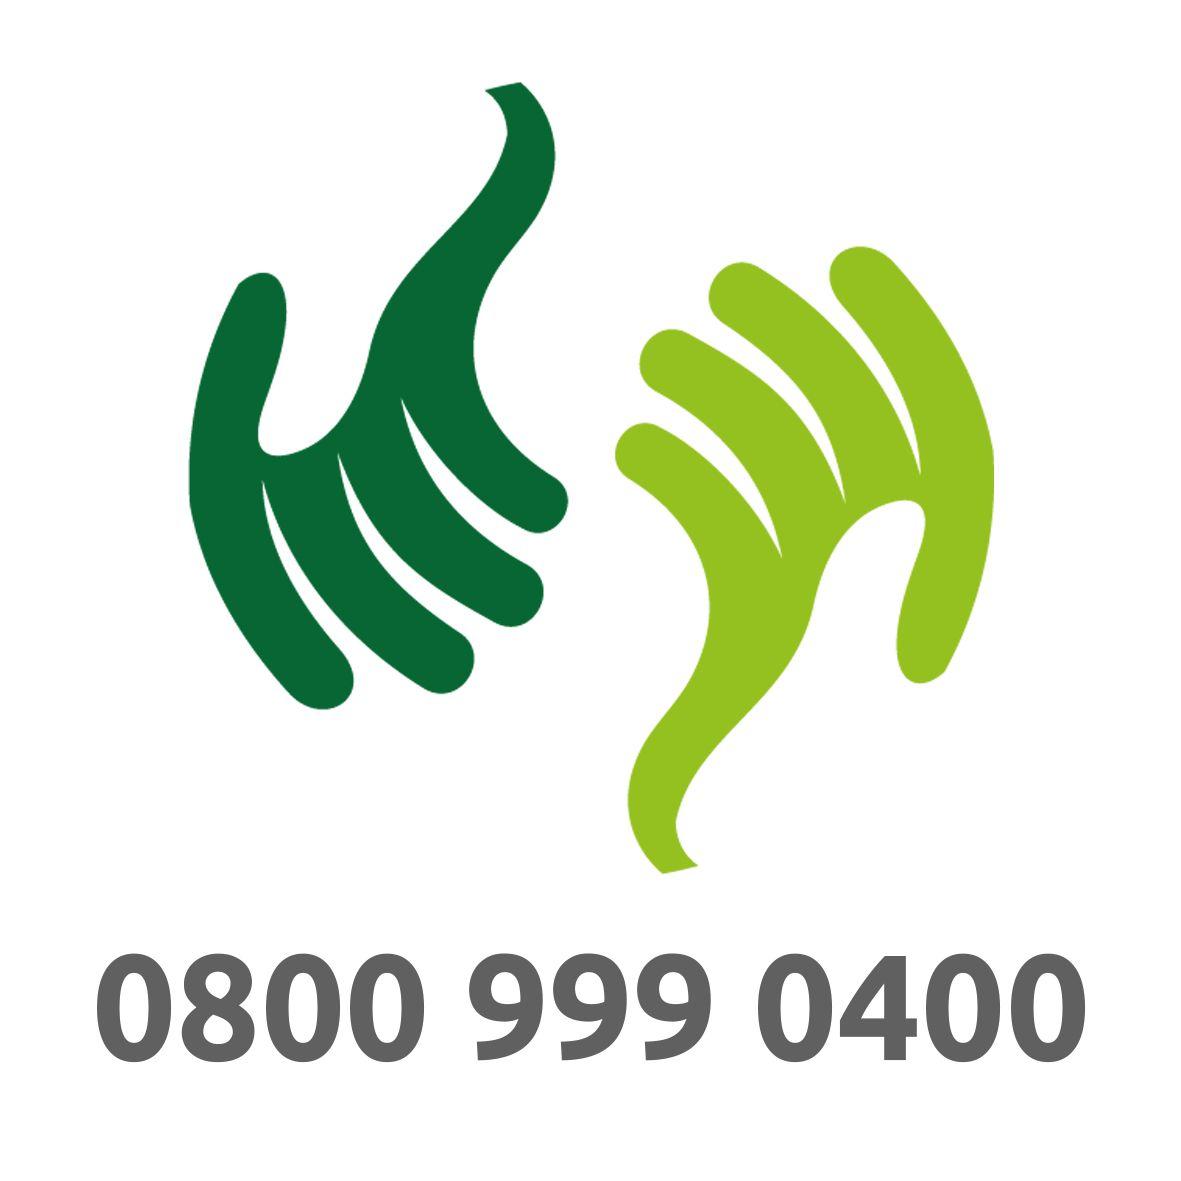 Elderly Logo - Lifeline24 - Personal Lifeline Alarm Service for the Elderly ...